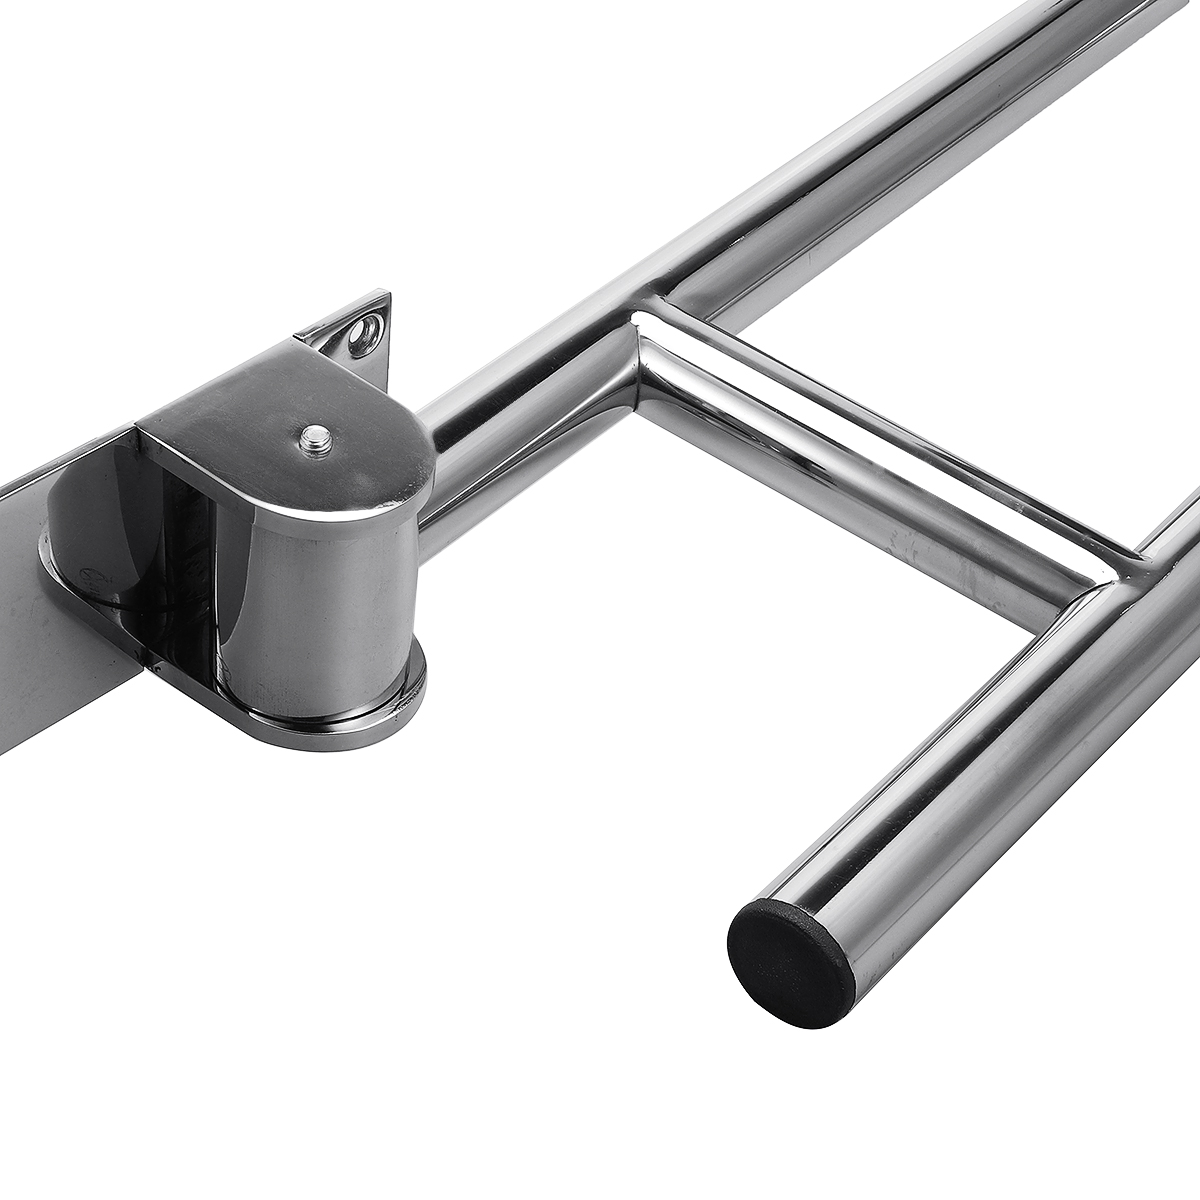 Stainless-Steel-Toilet-Safety-Frame-Rail-Grab-Bar-Handicap-Bathroom-Hand-Grips-1650108-9